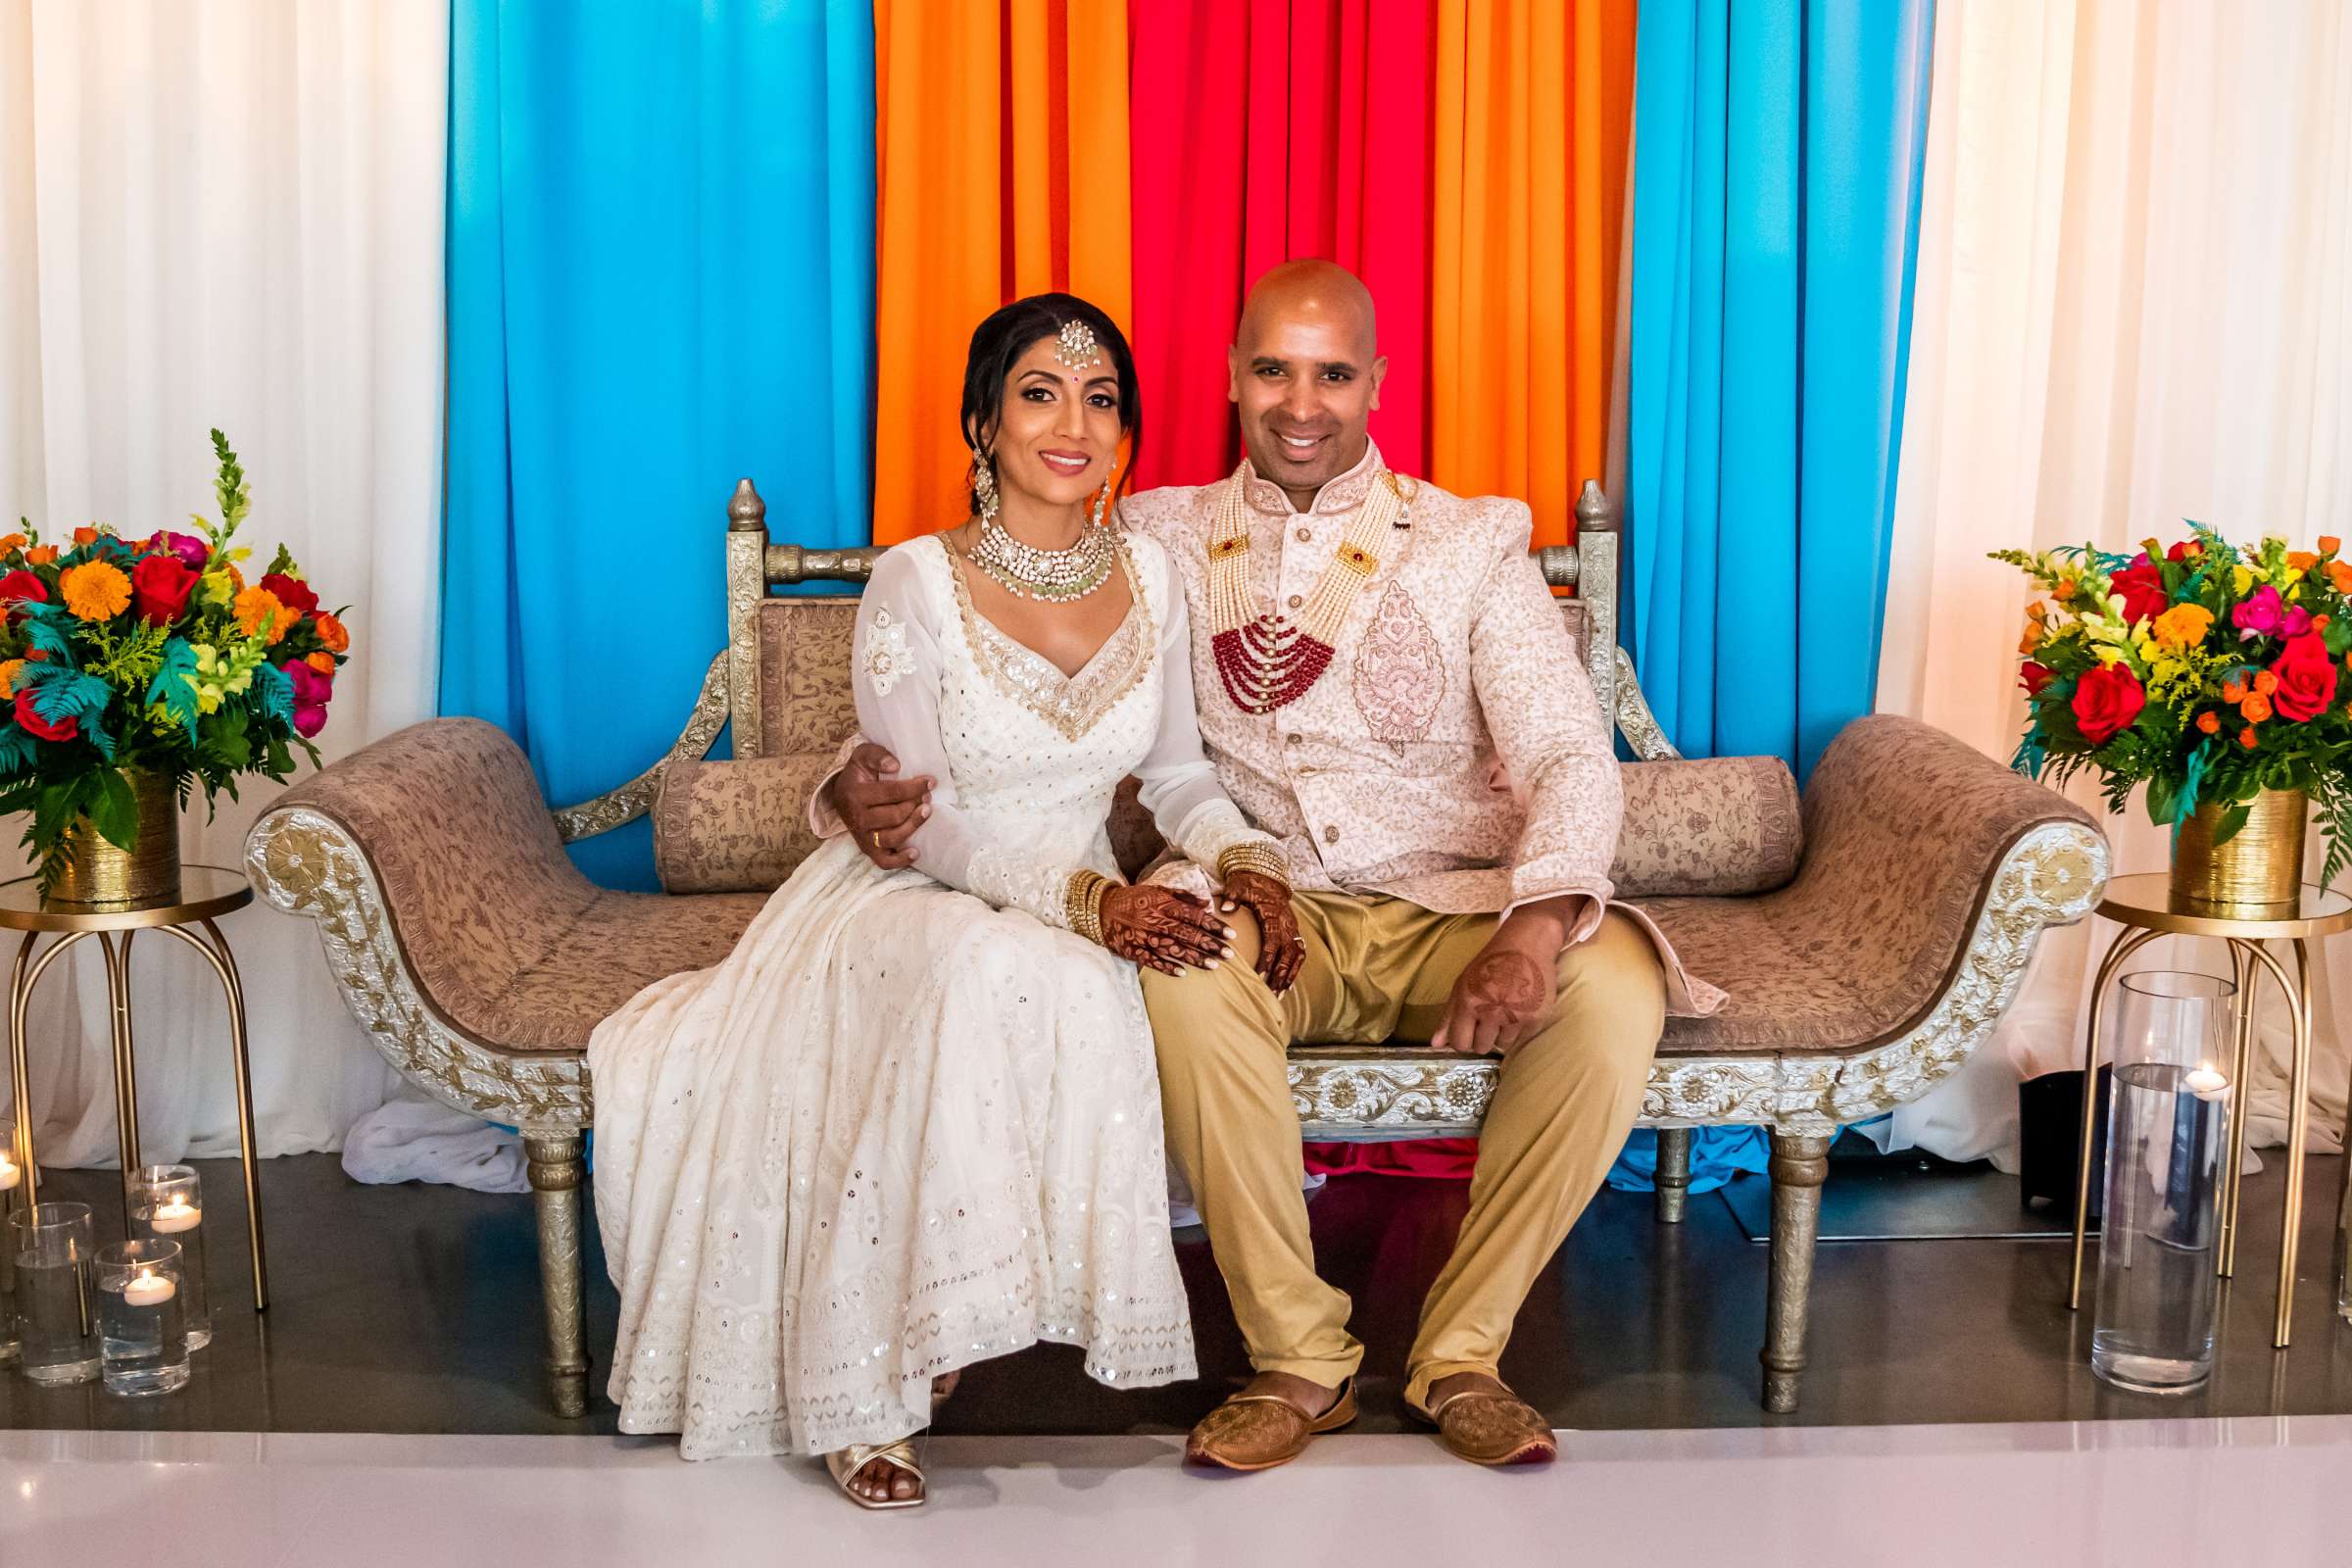 San Diego Mission Bay Resort Wedding coordinated by Sweet Love Designs, Anita and Hari Sangeet Wedding Photo #3 by True Photography